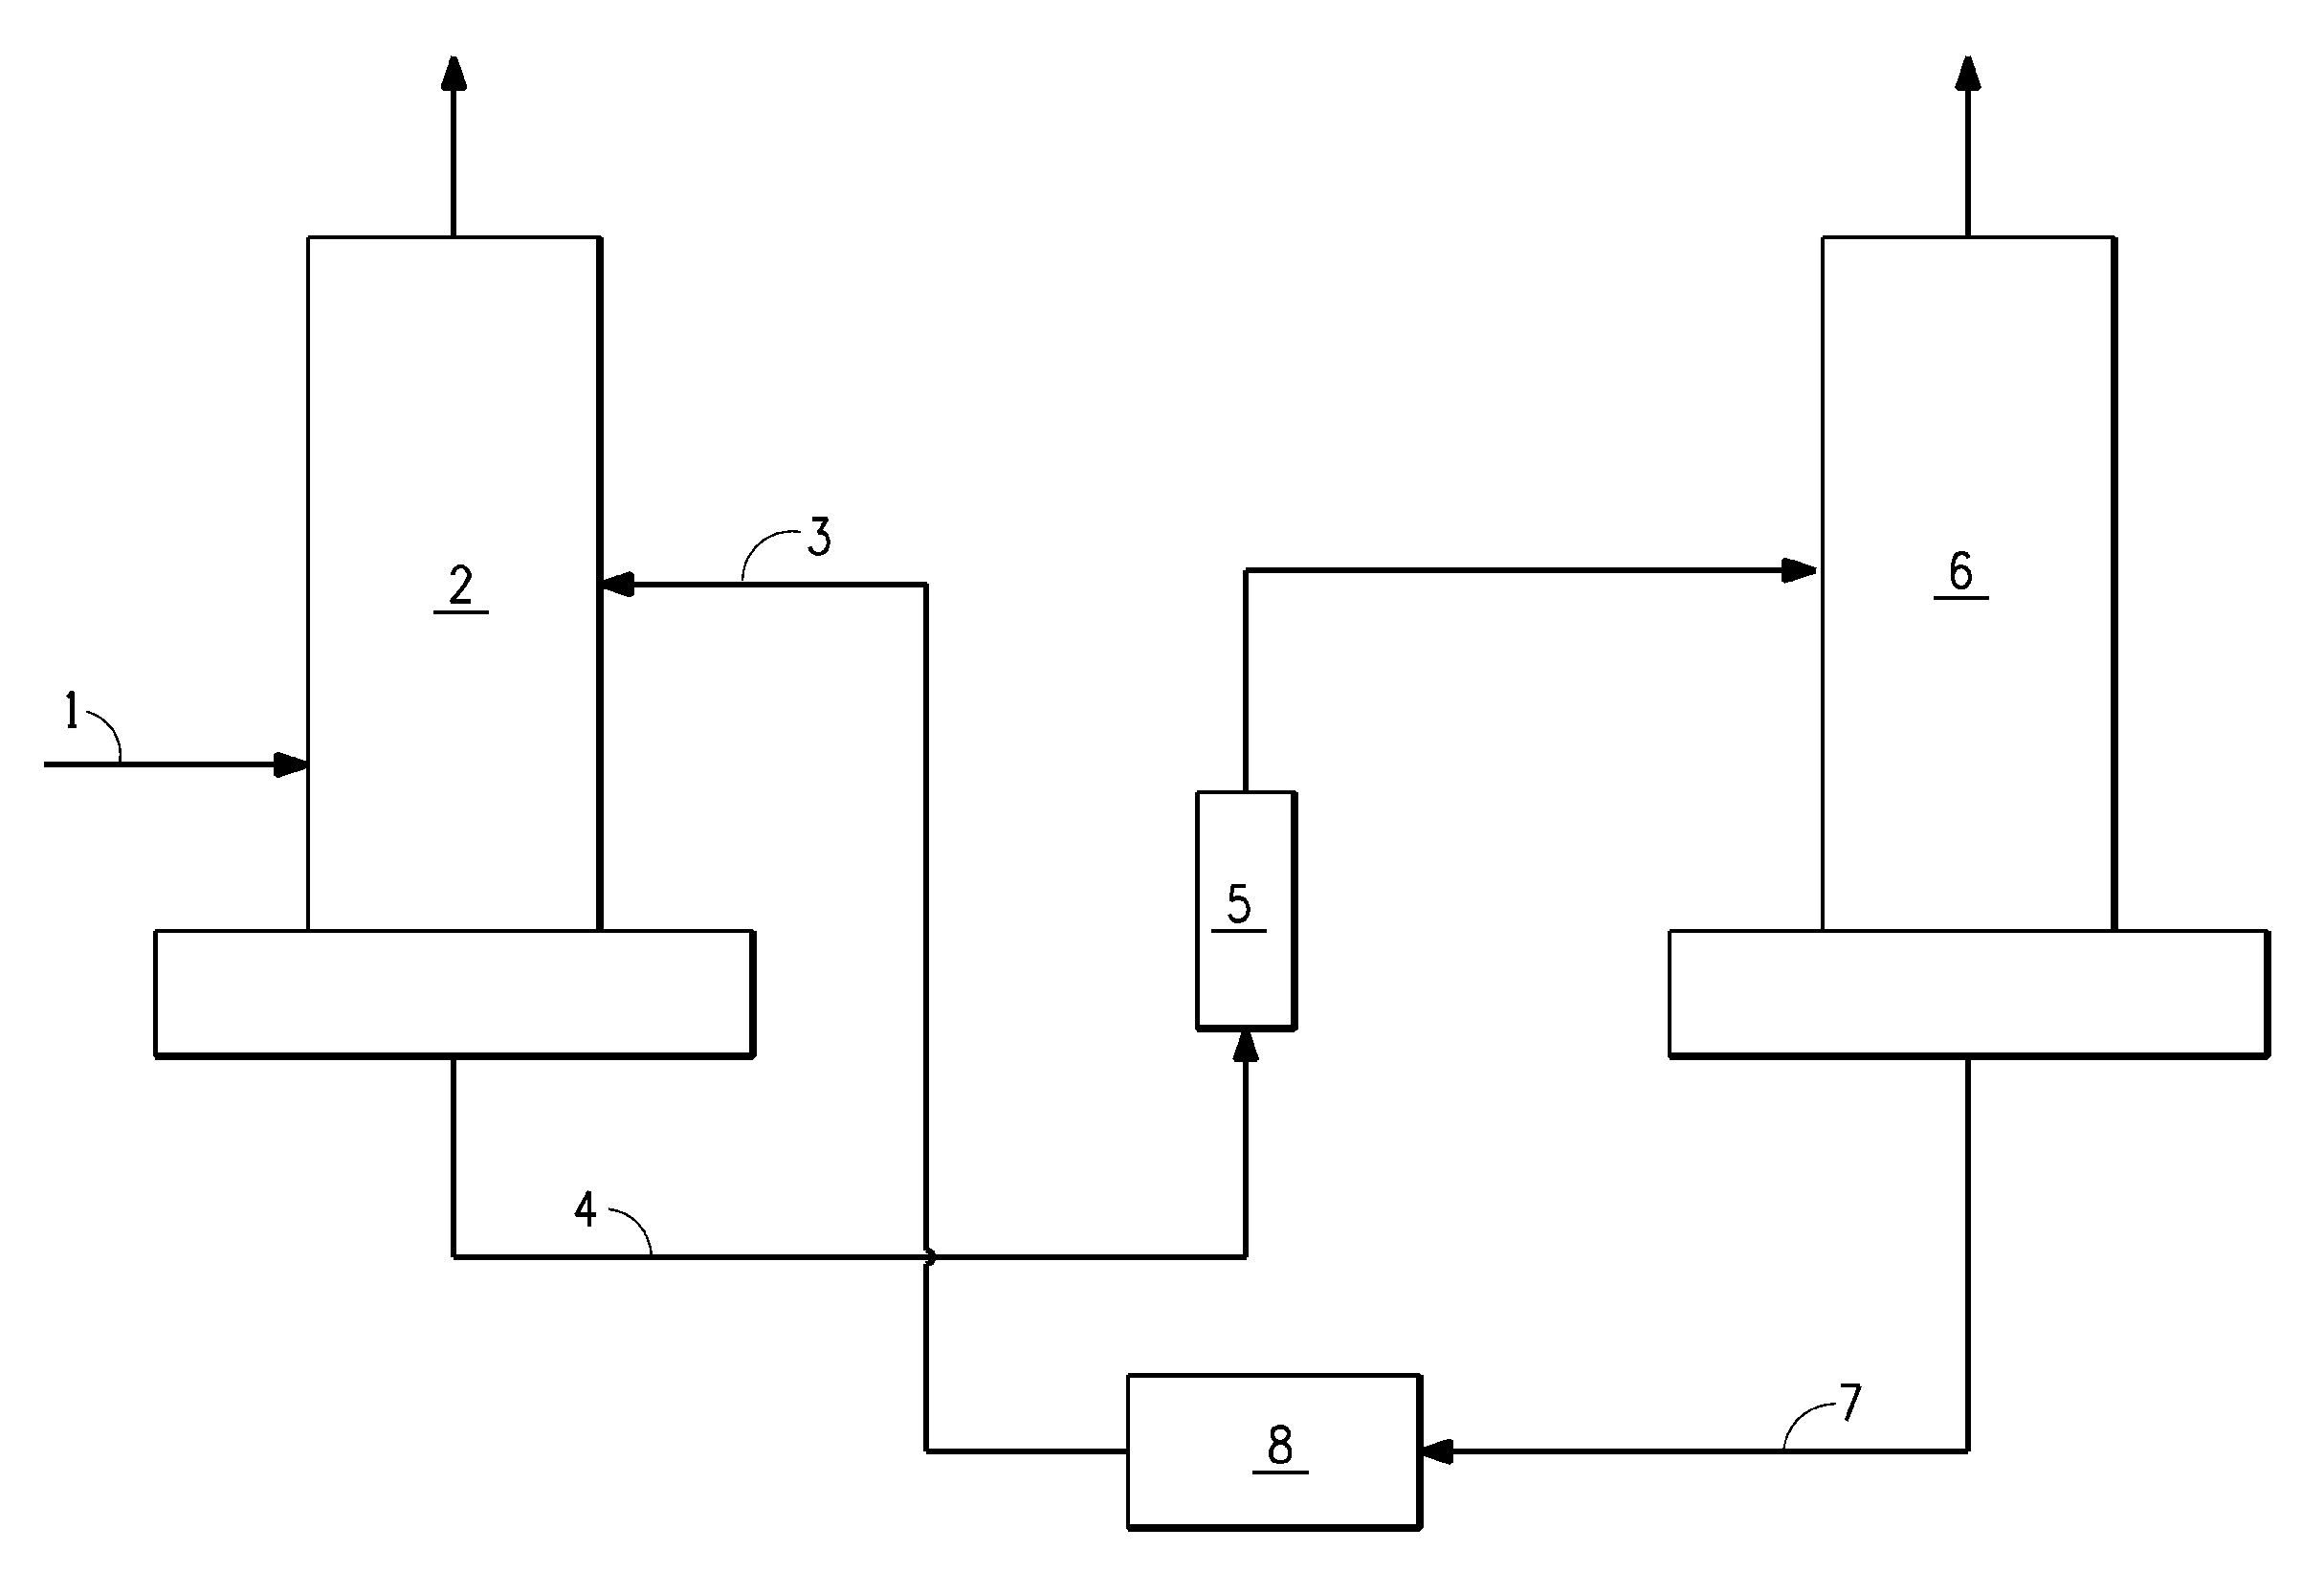 Purification of 1,2,3,3,3-Pentafluoropropene by Extractive Distillation